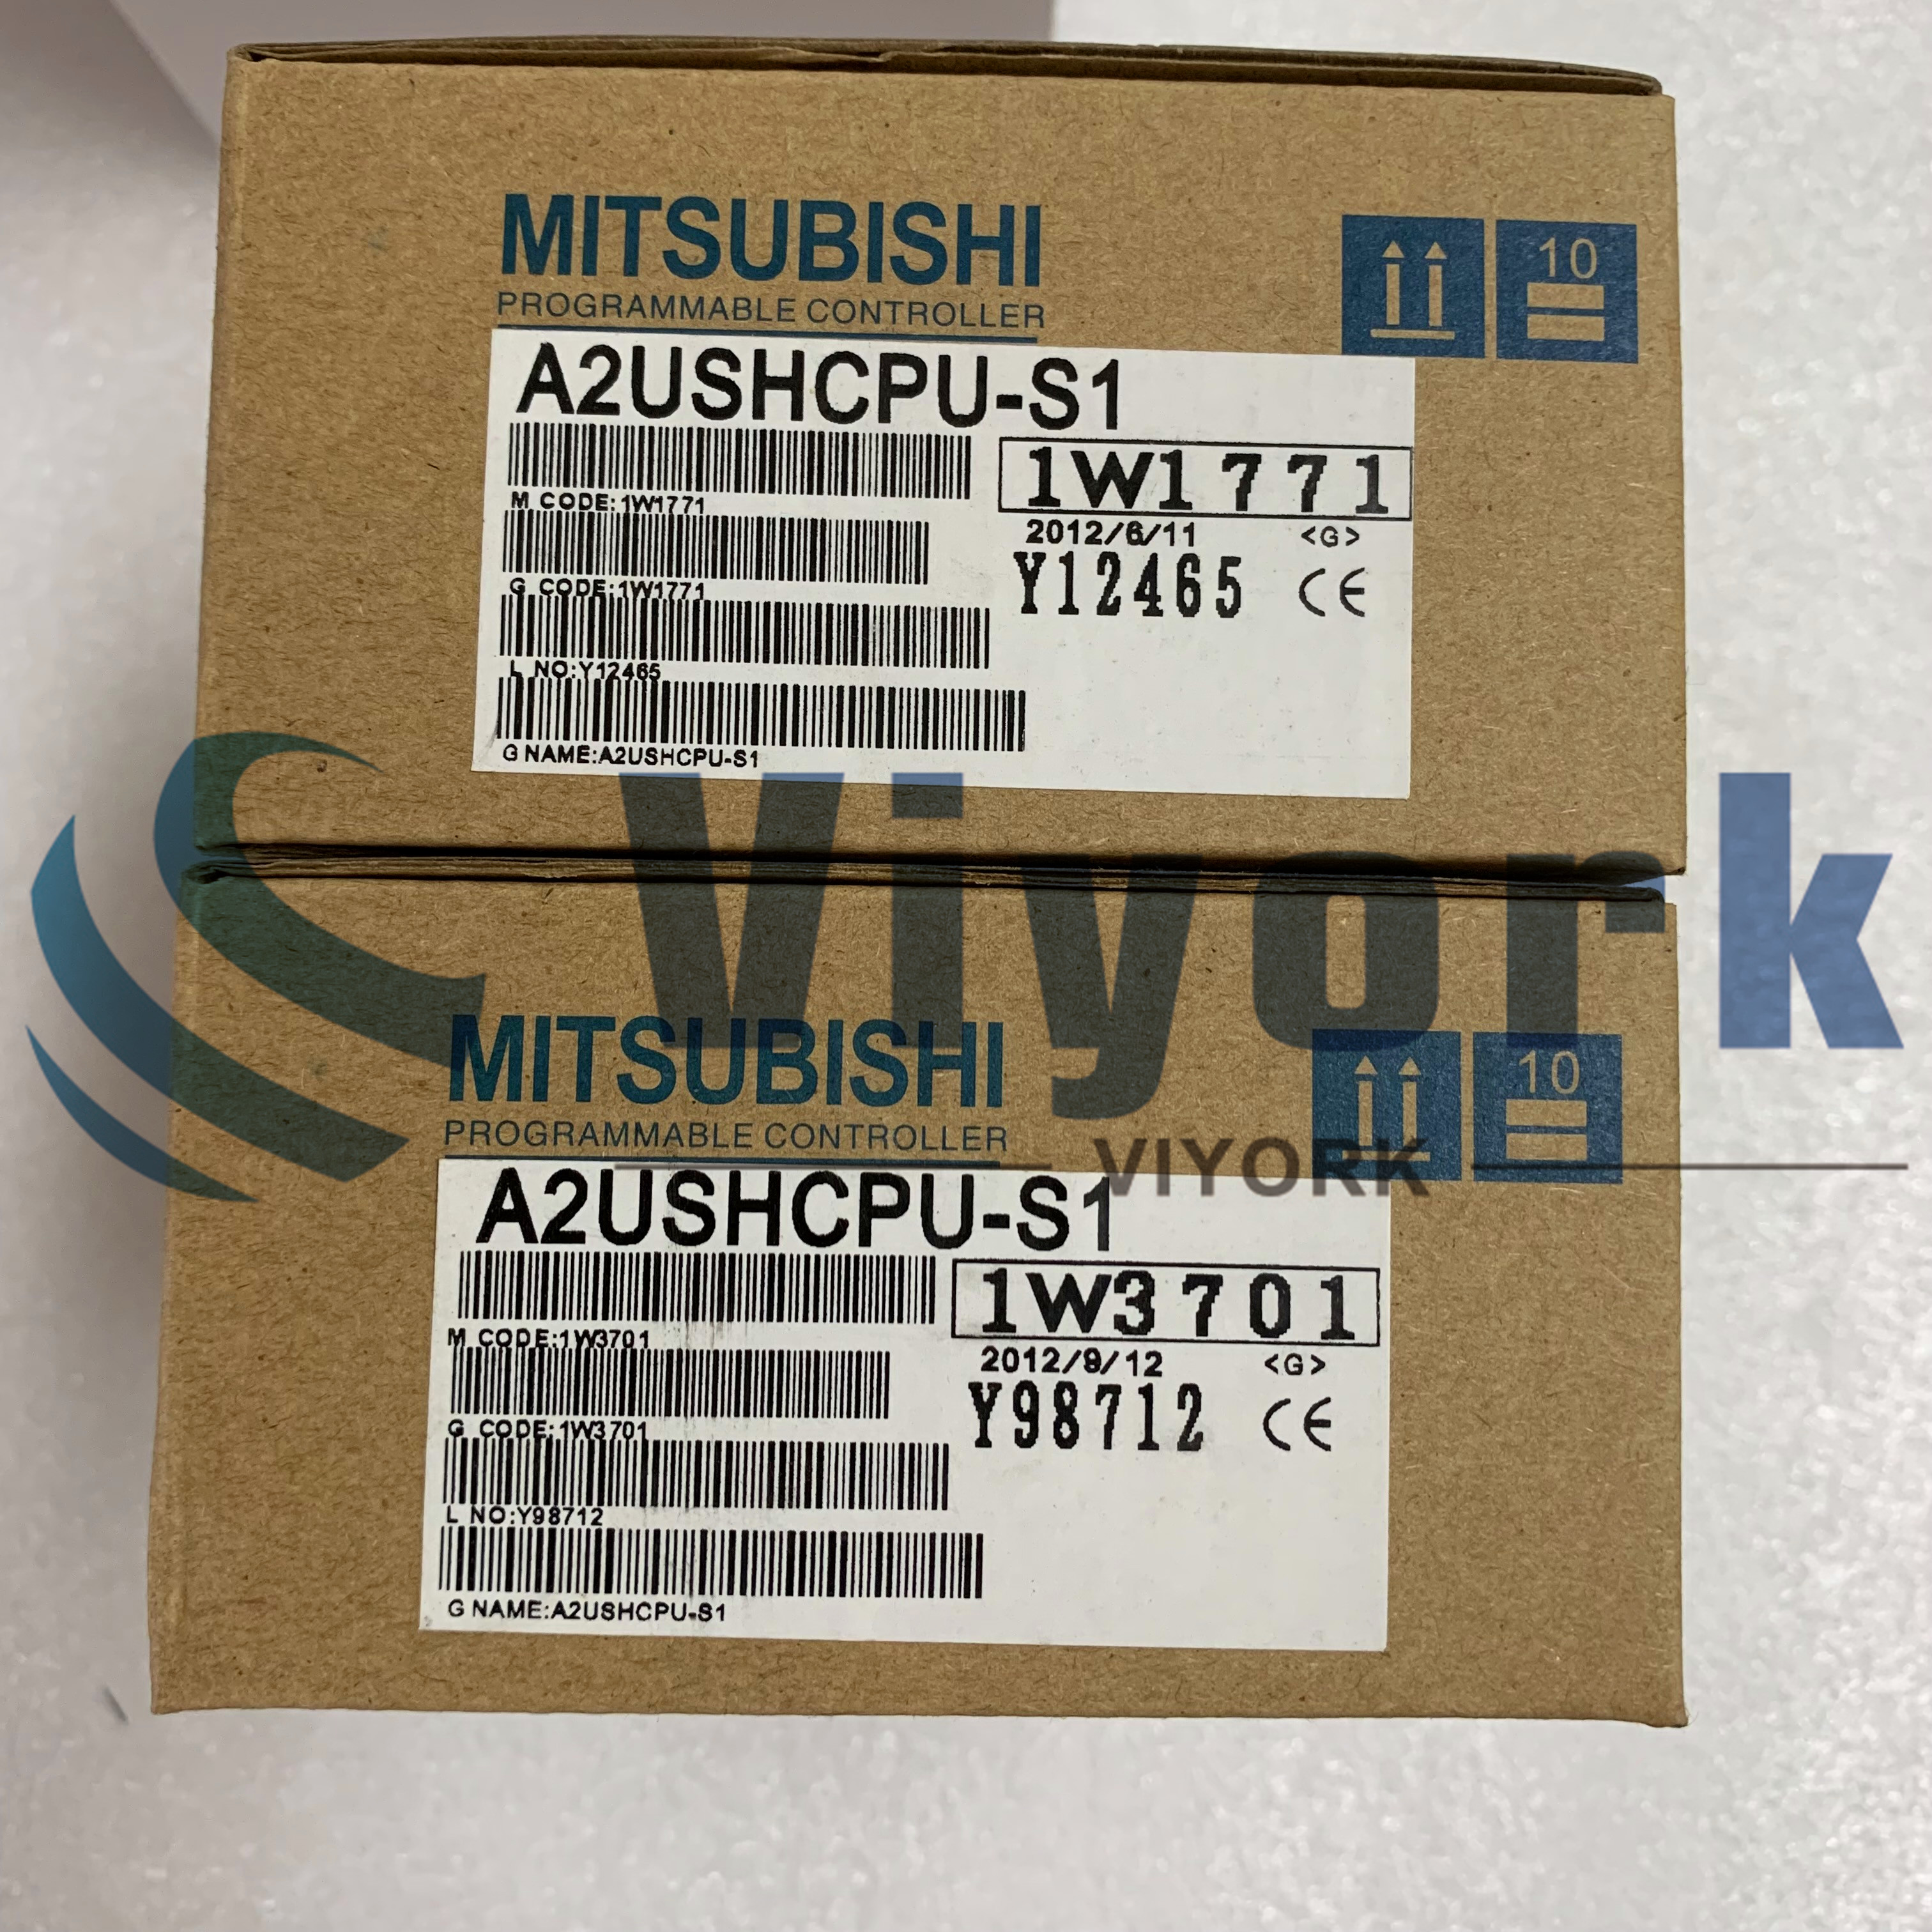 Mitsubishi A2USHCPU-S1 CPU MODULE 24 VDC 1024 DIGITAL INPUTS 30K STEPS NEW